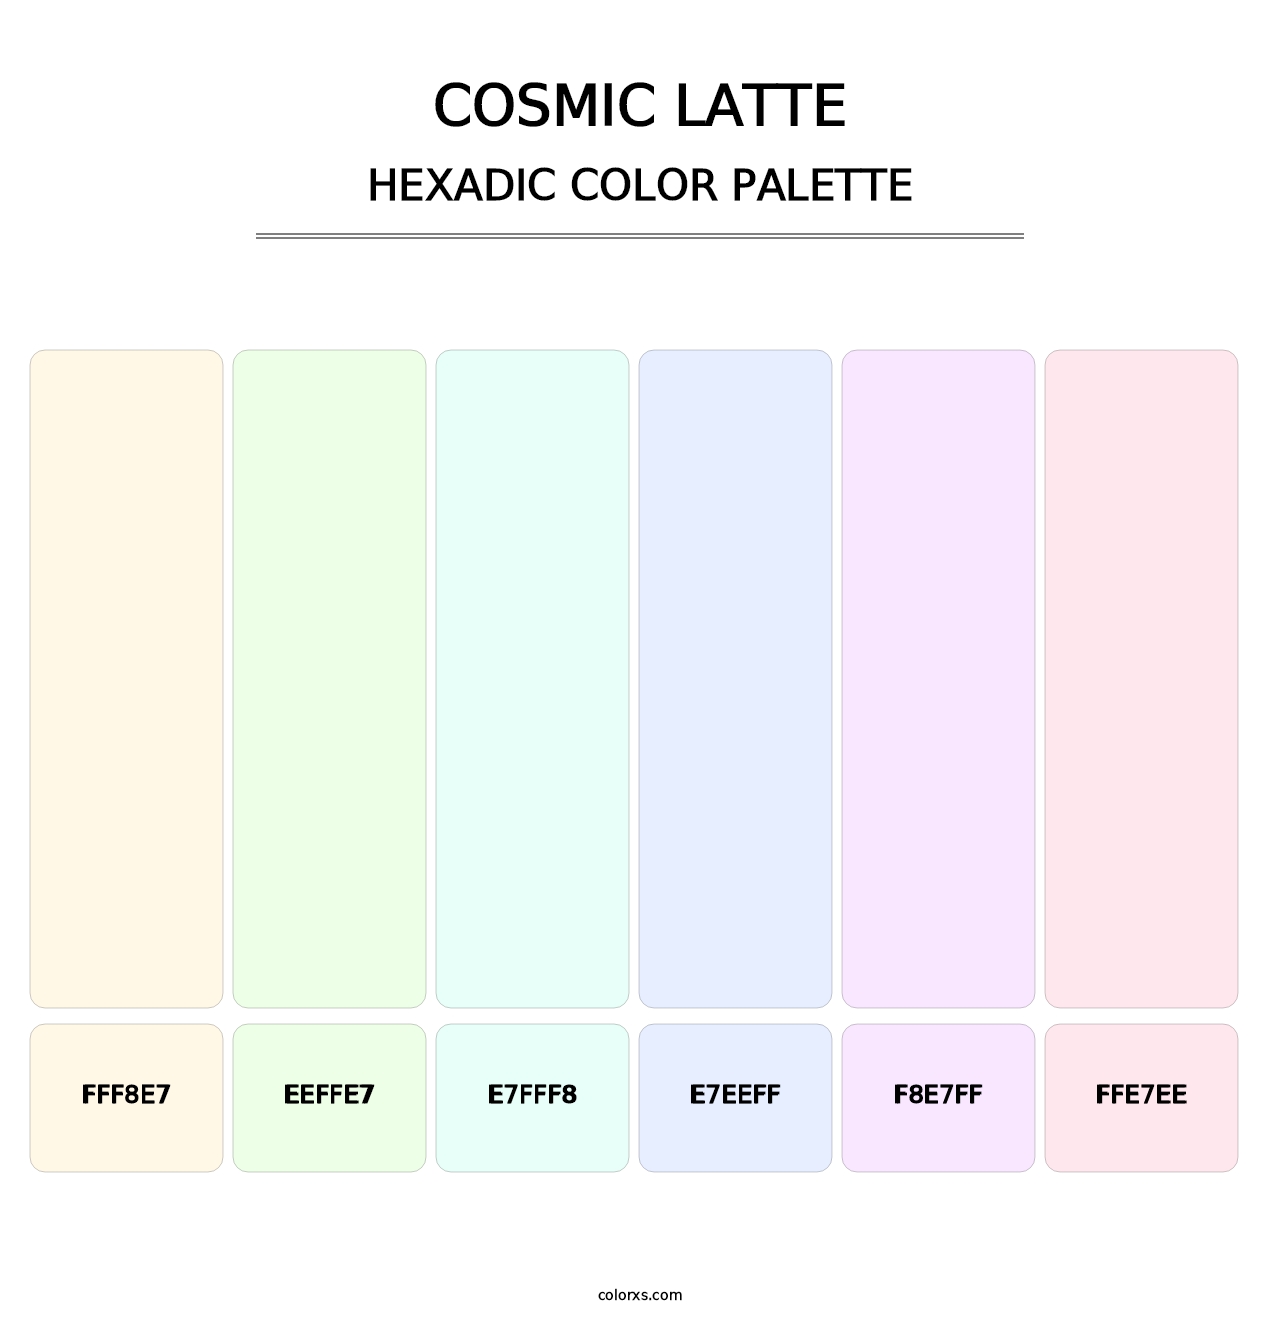 Cosmic Latte - Hexadic Color Palette